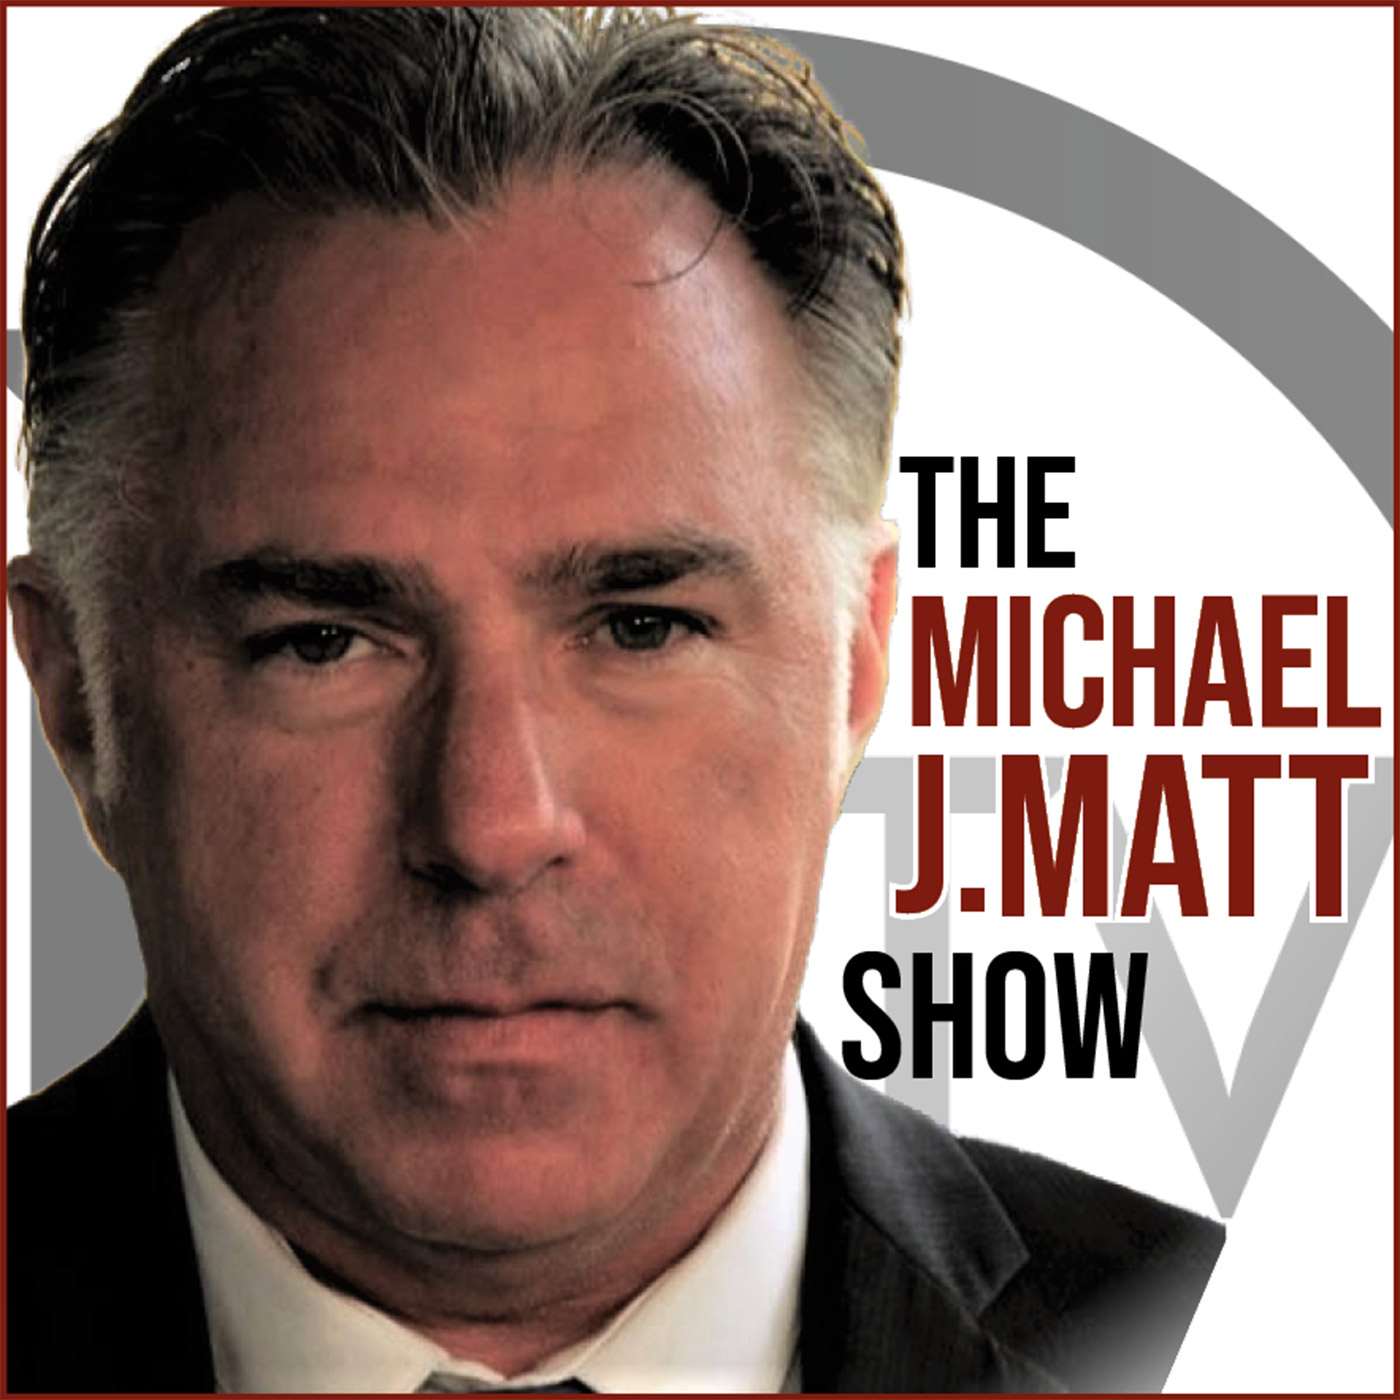 REALITY CHECK: Michael J. Matt Has COVID